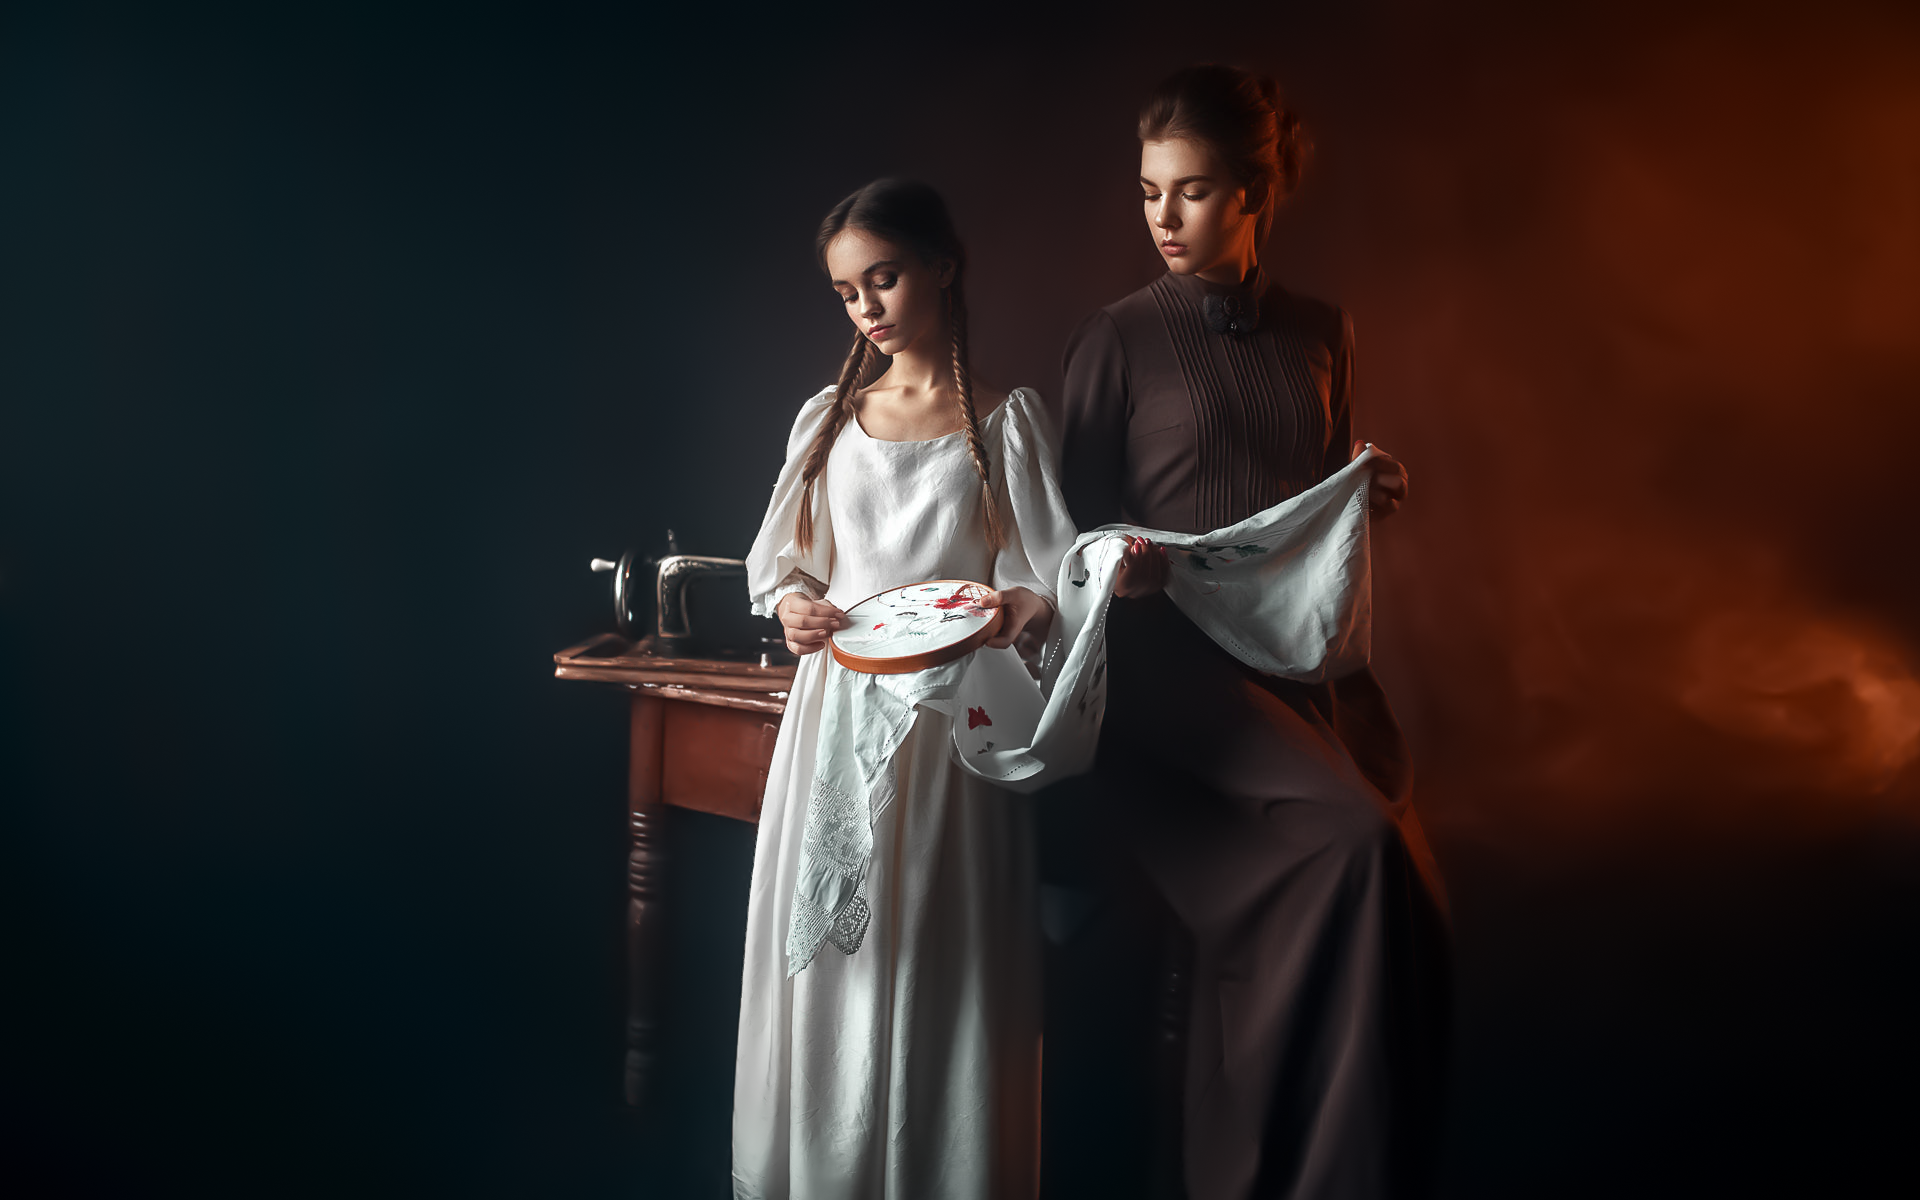 Ivan Losev Women Two Women Brunette Twintails Dress White Clothing Brown Clothing Sewing Machine Stu 1920x1200